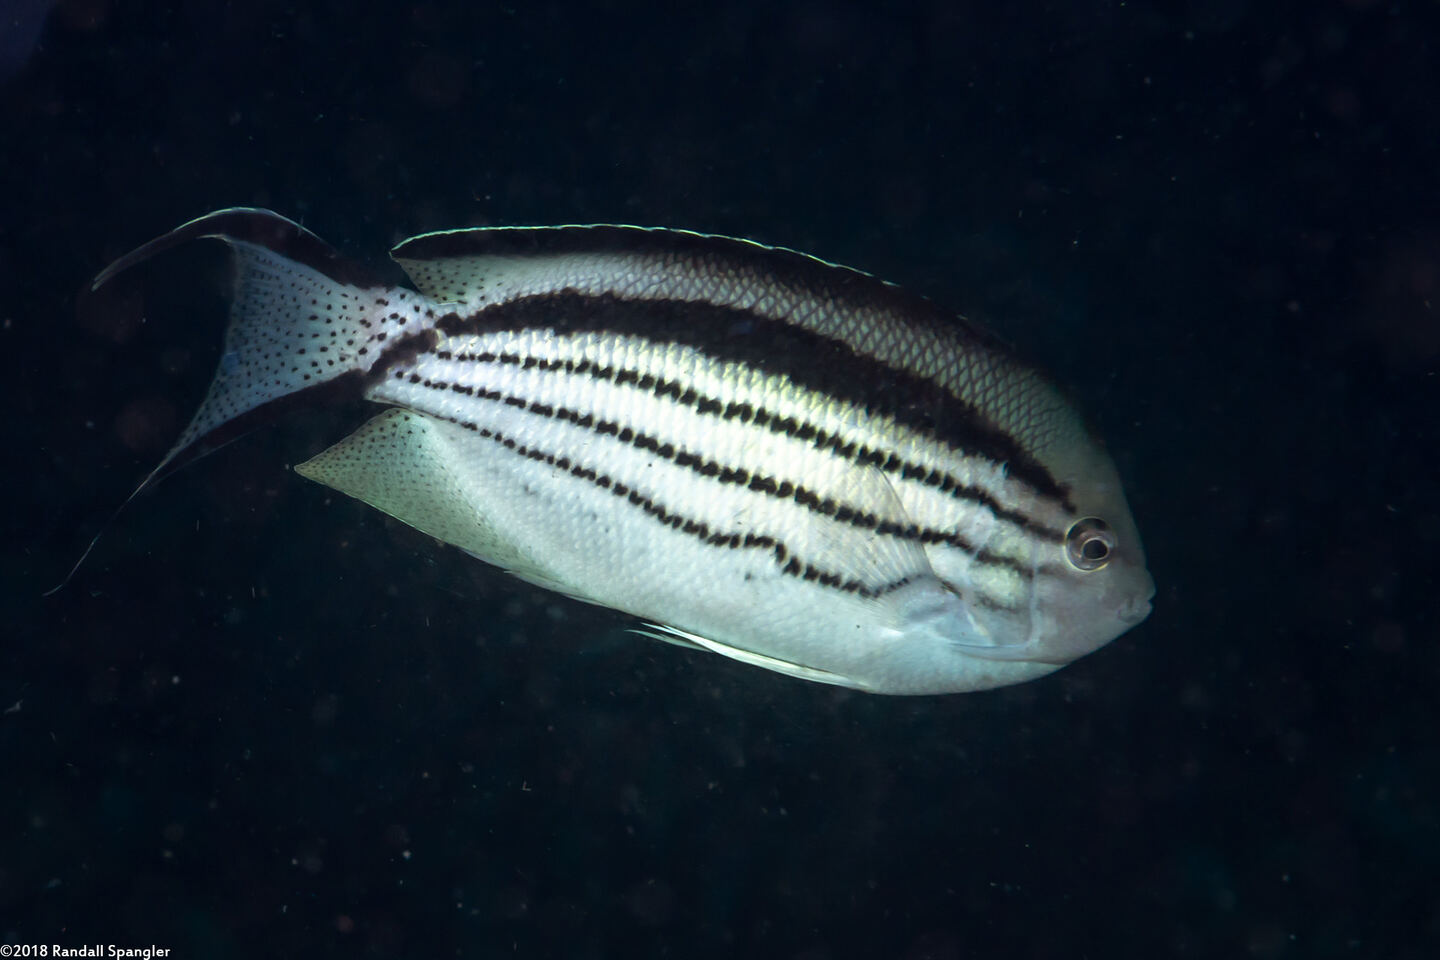 Genicanthus lamarck (Blackstriped Angelfish)